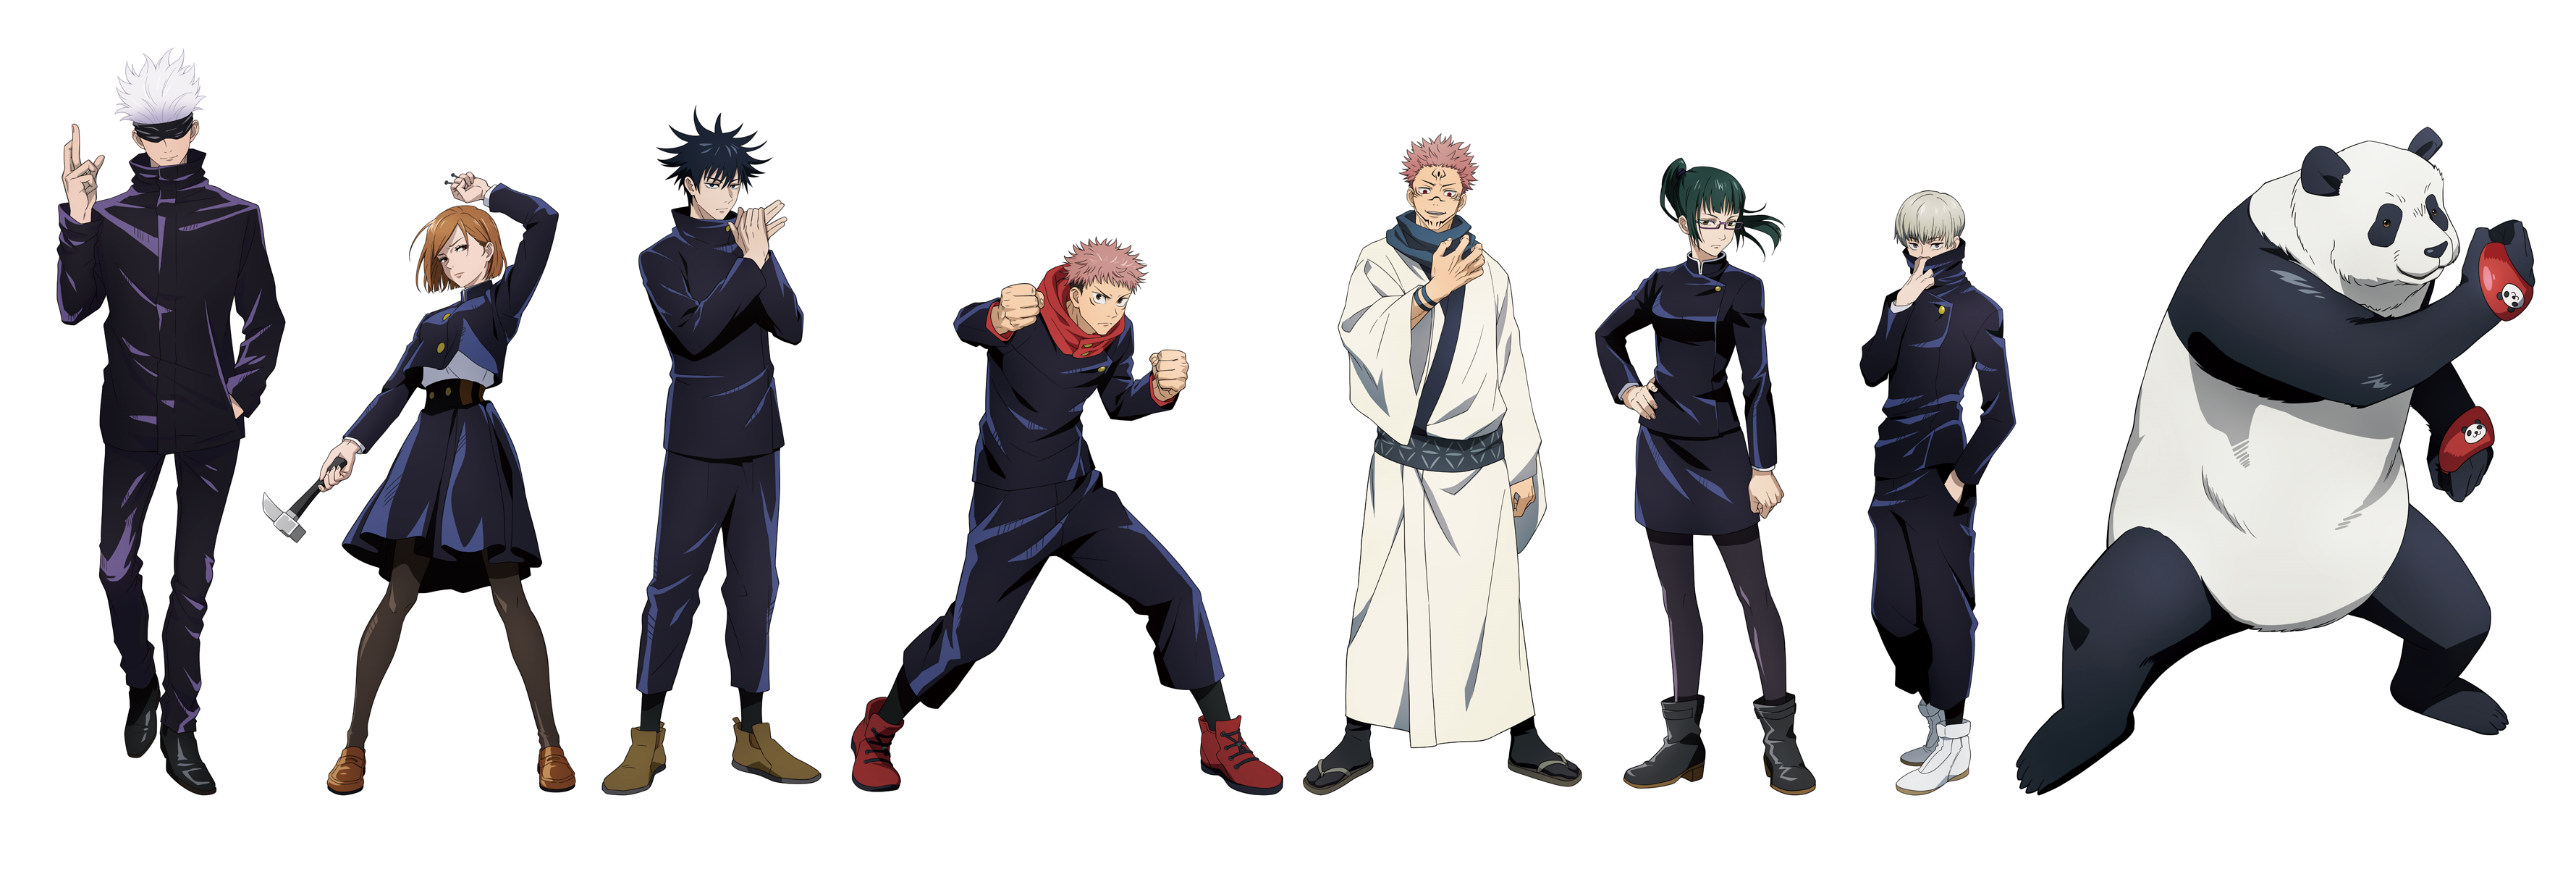 Neues Charakter-Visual zum »Jujutsu Kaisen«-Anime | Anime2You